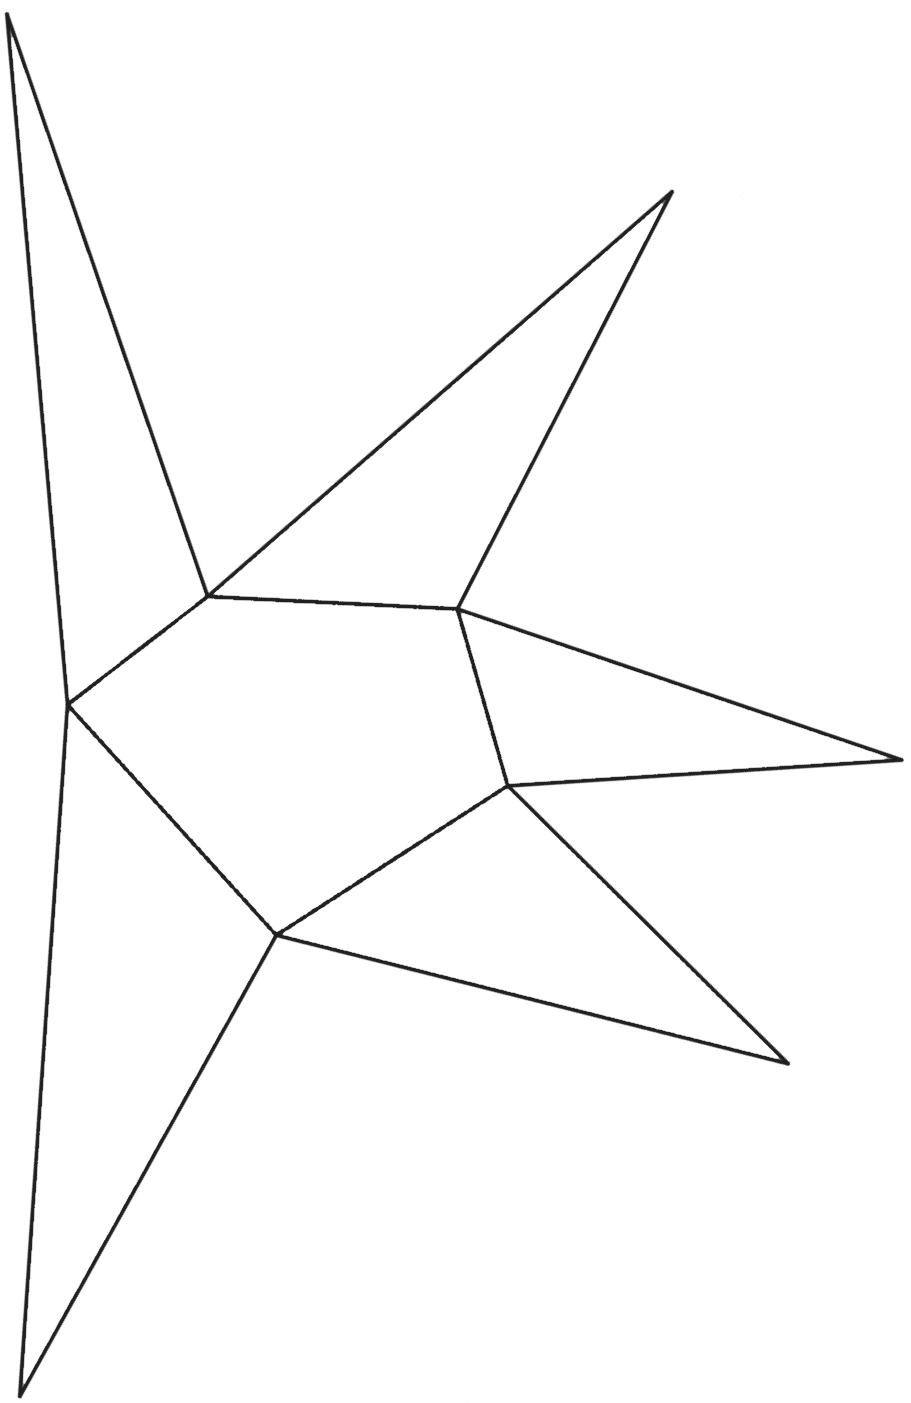 sviluppo-piramide-pentagonale-obliqua.p